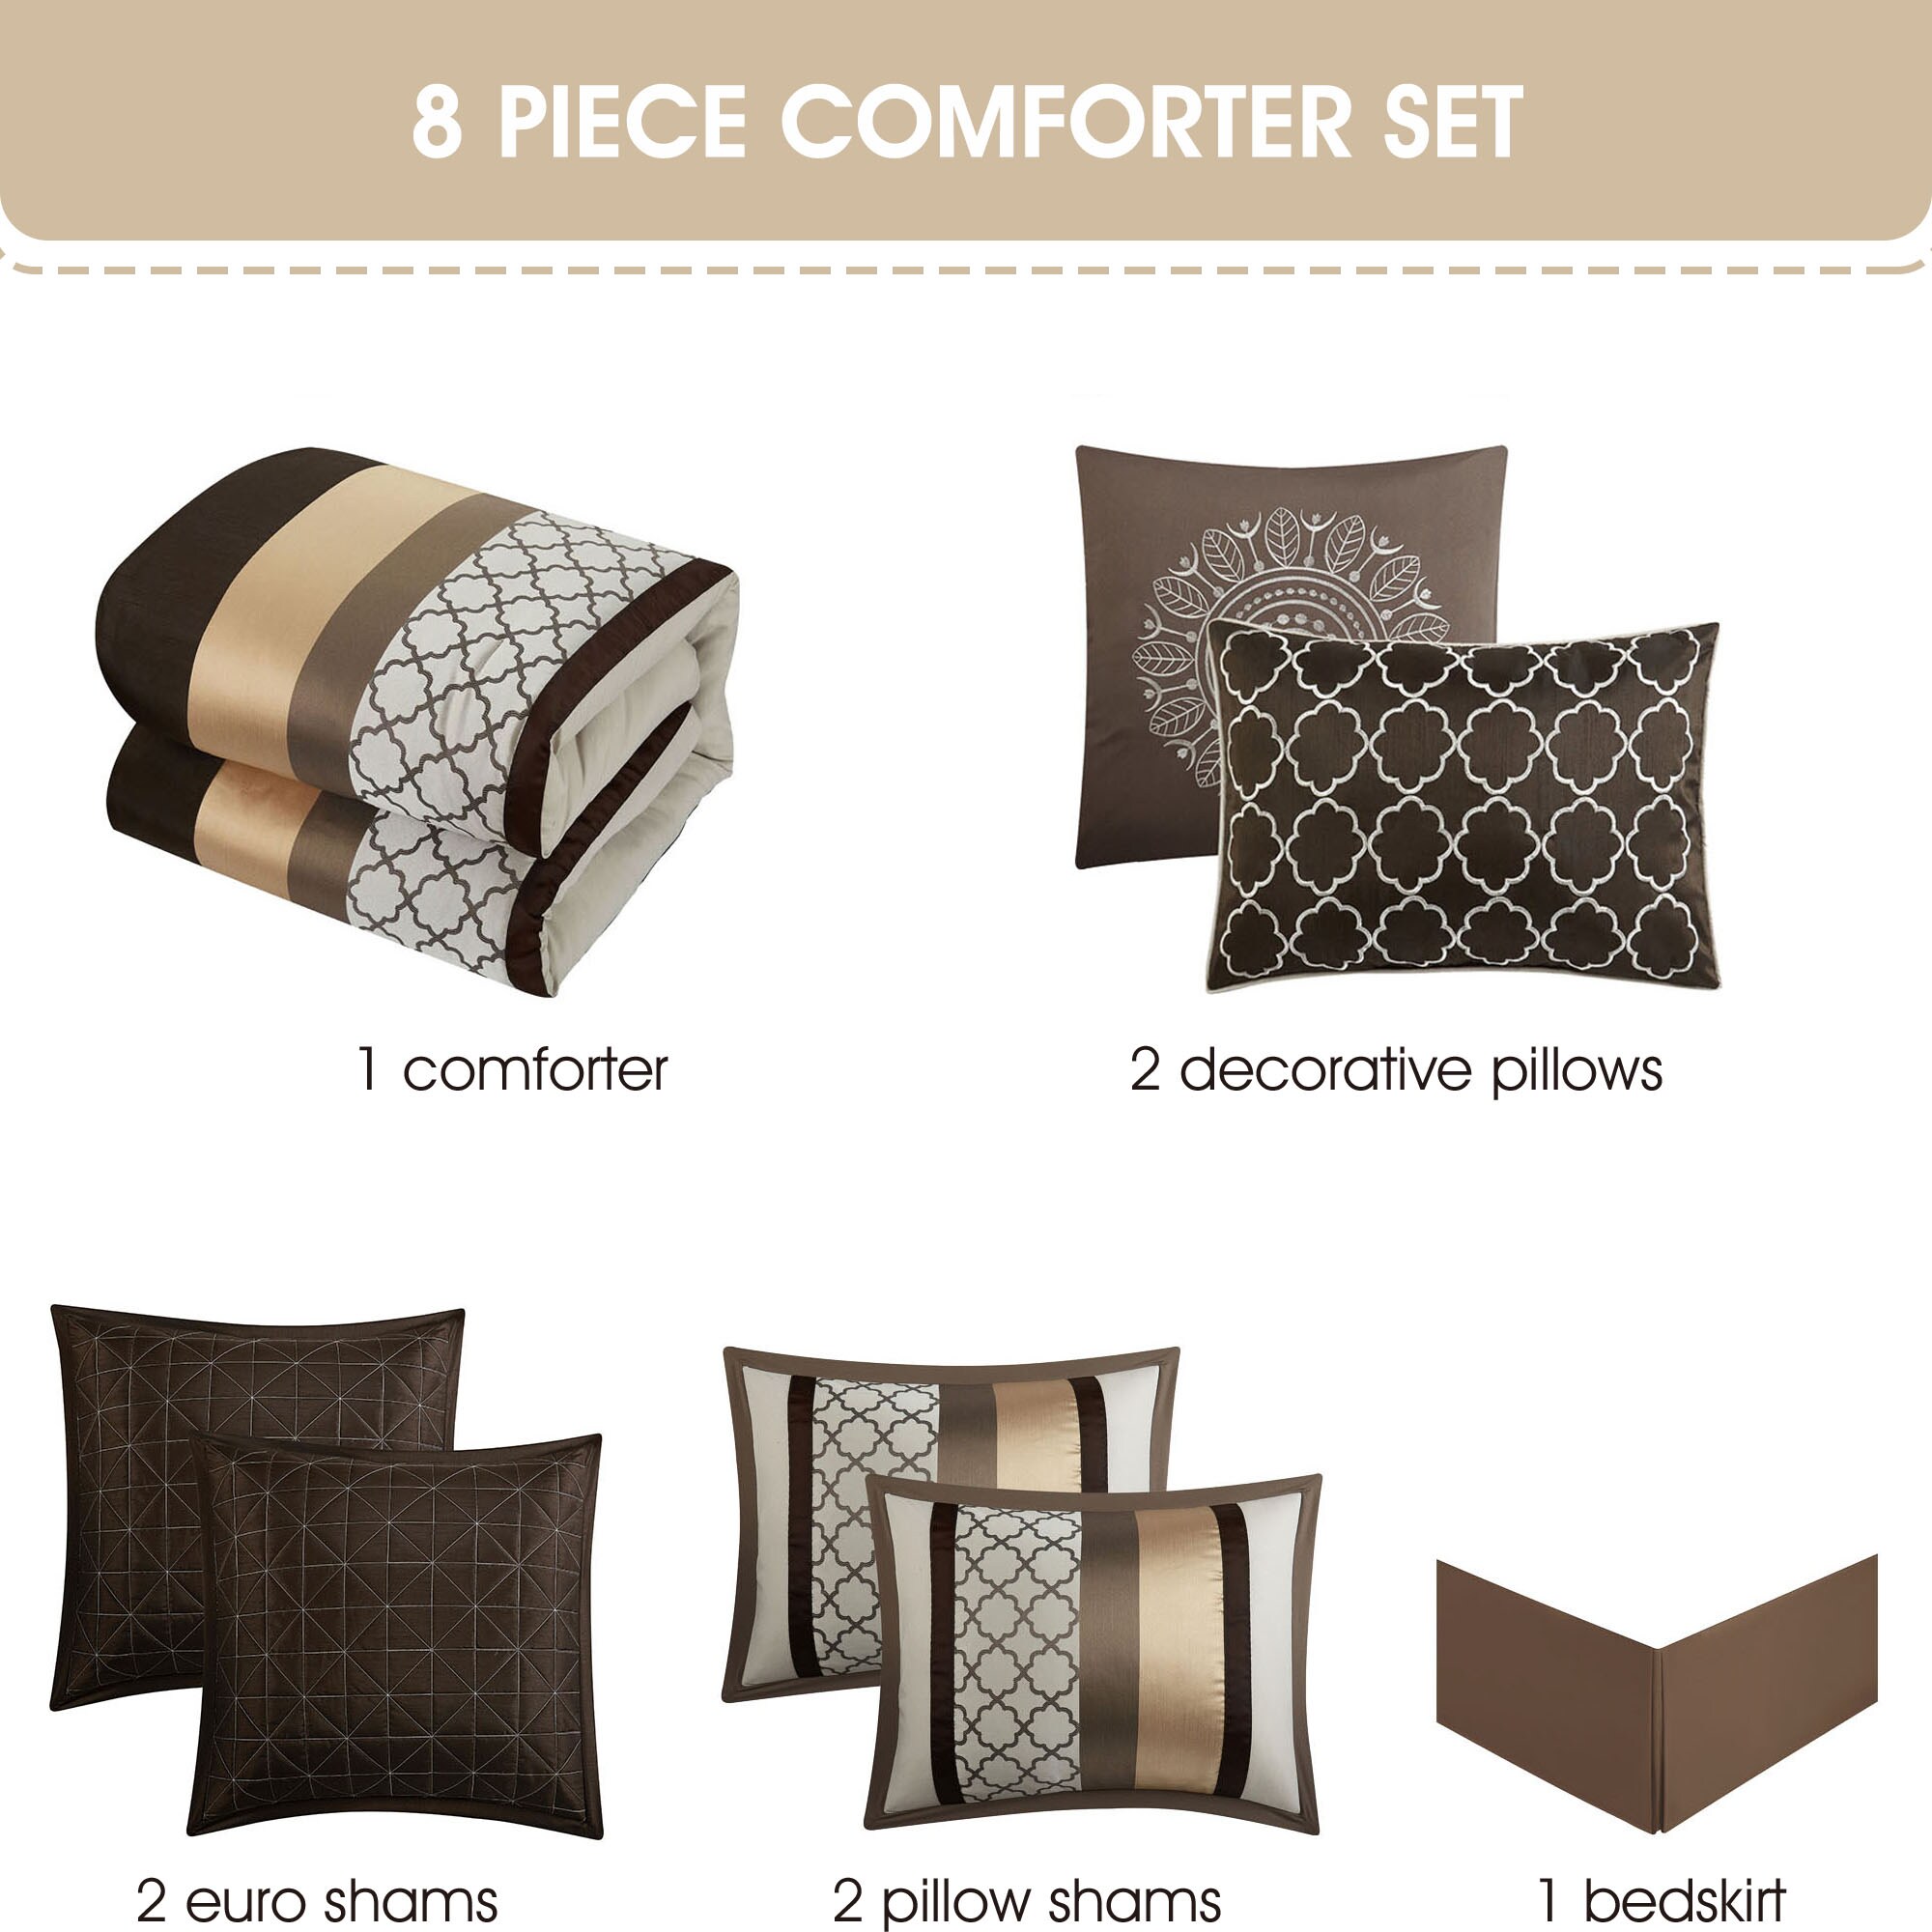 Grand Avenue 8-Piece Brown Queen Comforter Set in the Bedding Sets